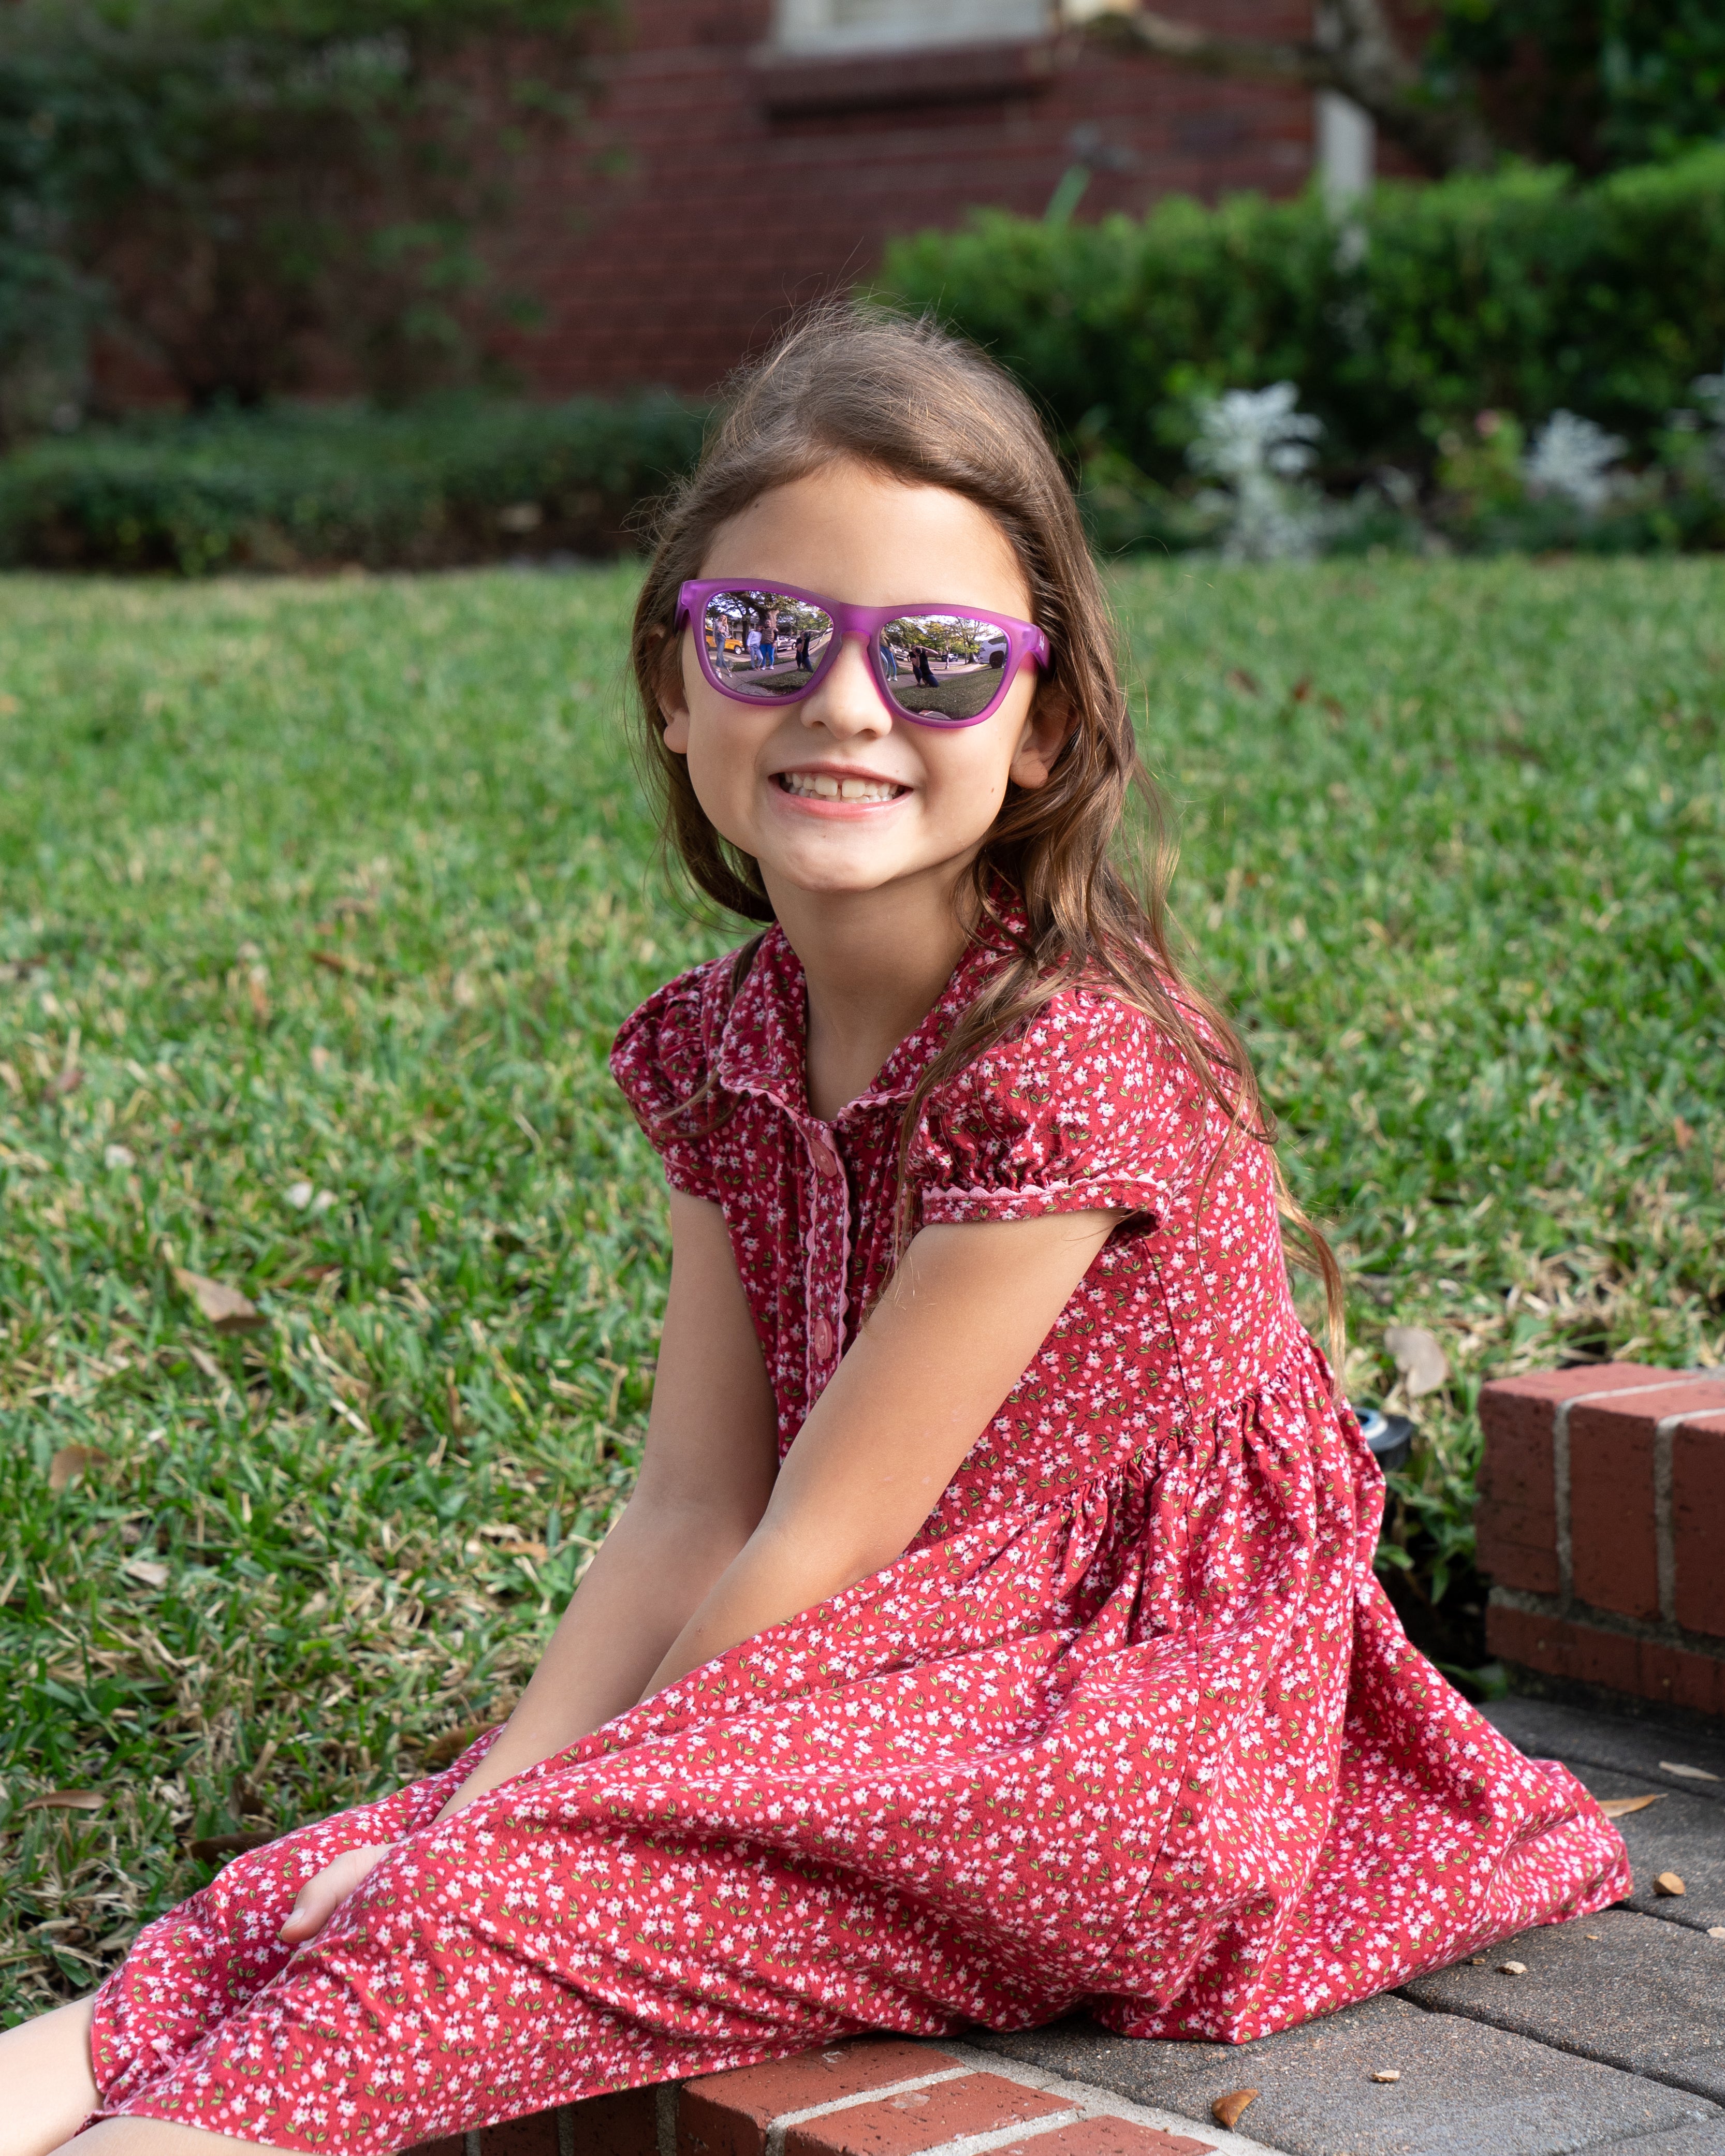  Retro Rewind Kids Sunglasses for Boys Girls Age 3-12 -  Shatterproof Rubberized Frame UV400 Toddler Children Sun Glasses :  Clothing, Shoes & Jewelry